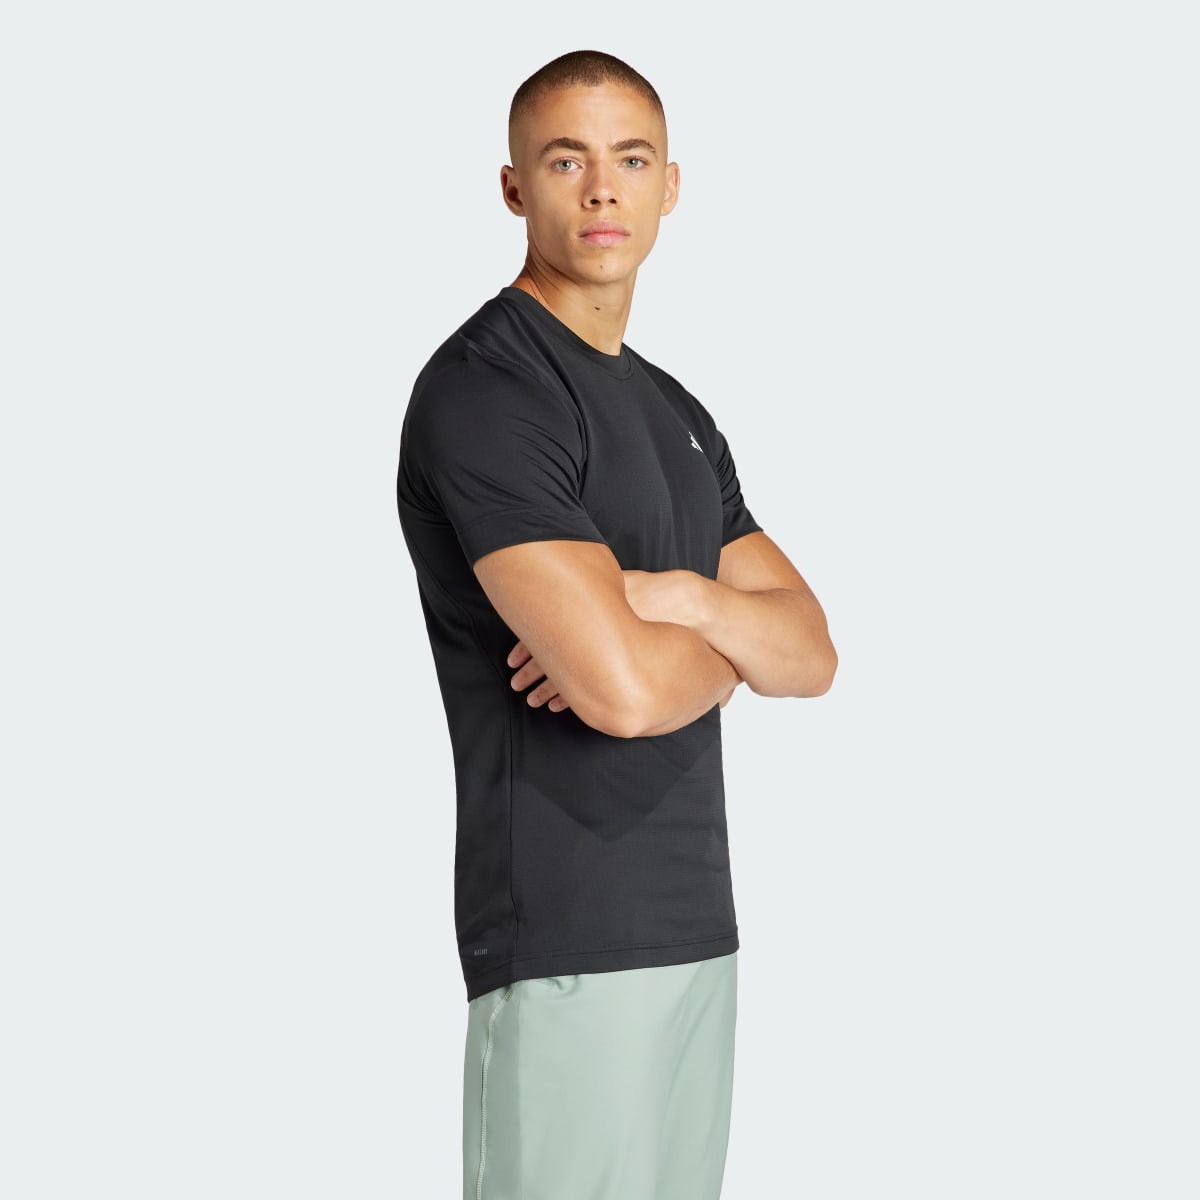 Adidas Tennis FreeLift T-Shirt. 4